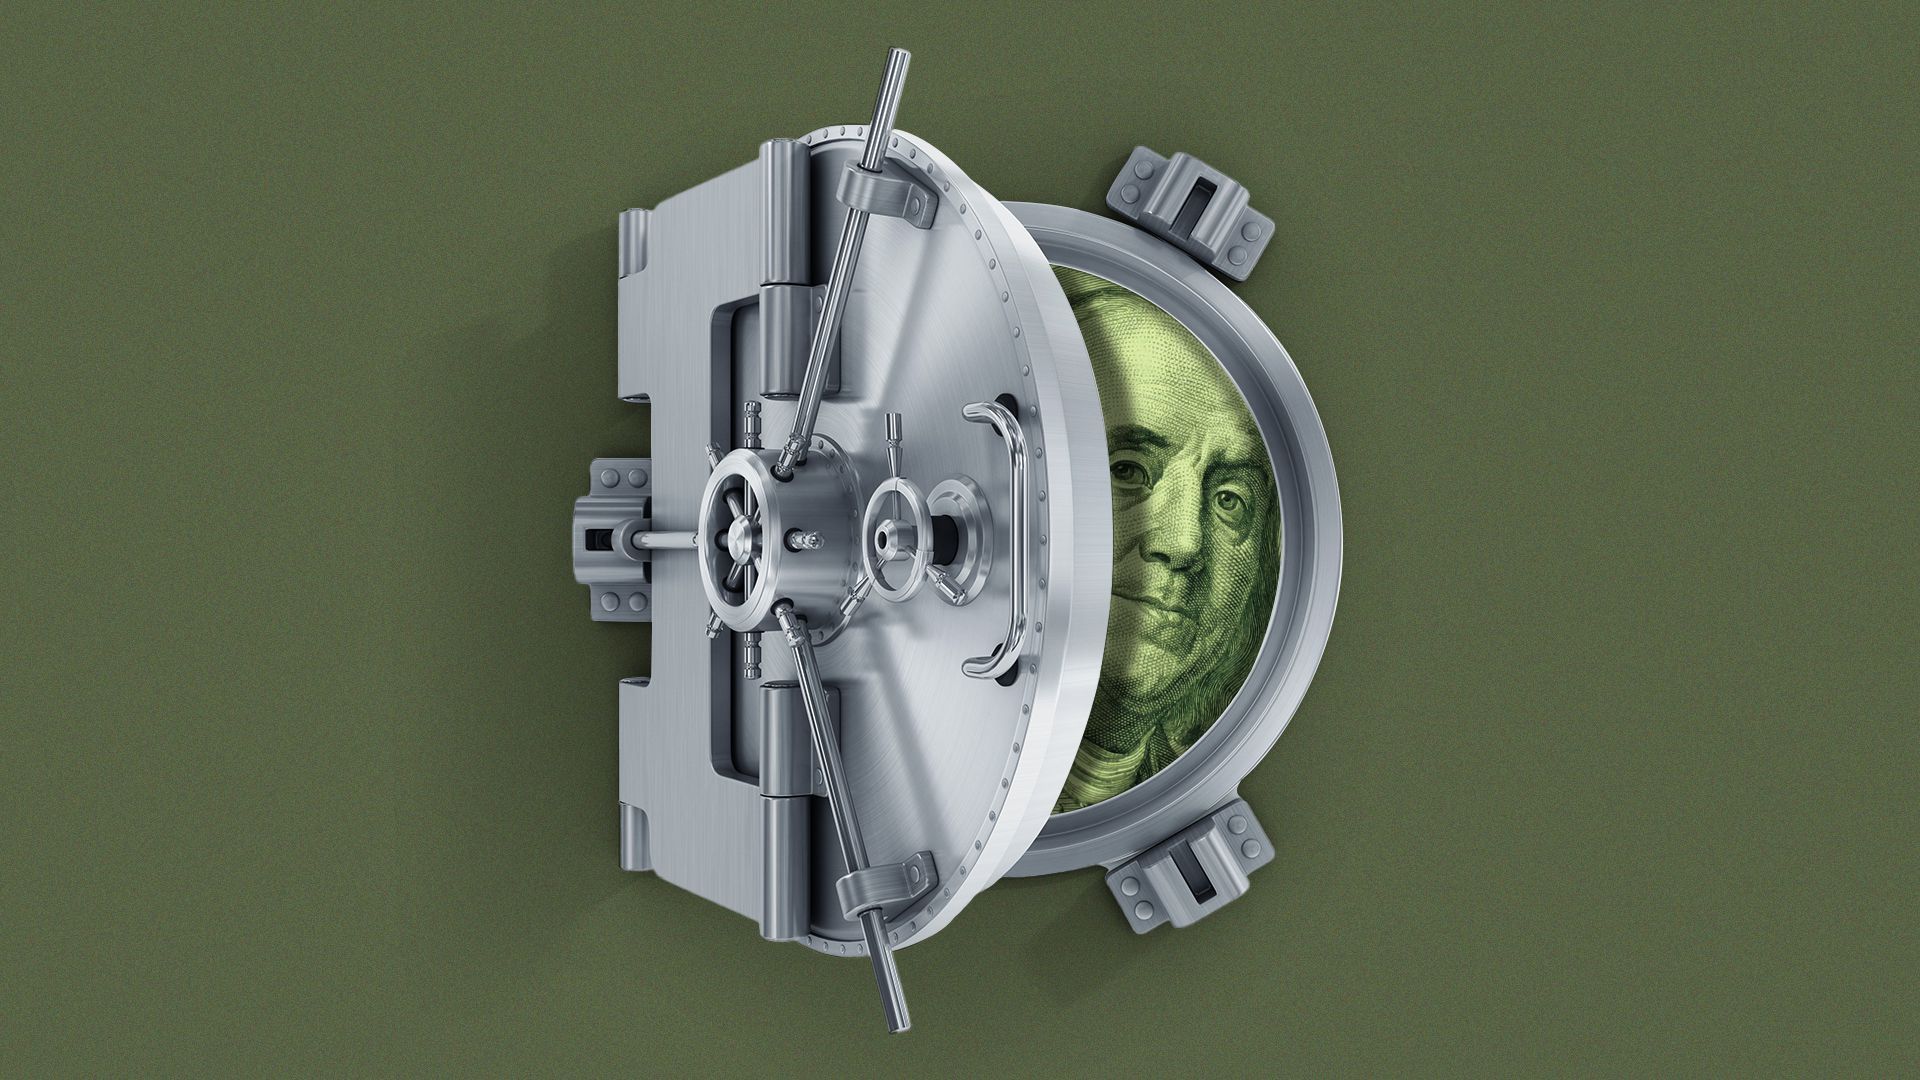 Illustration of Ben Franklin peeking out from behind a vault door